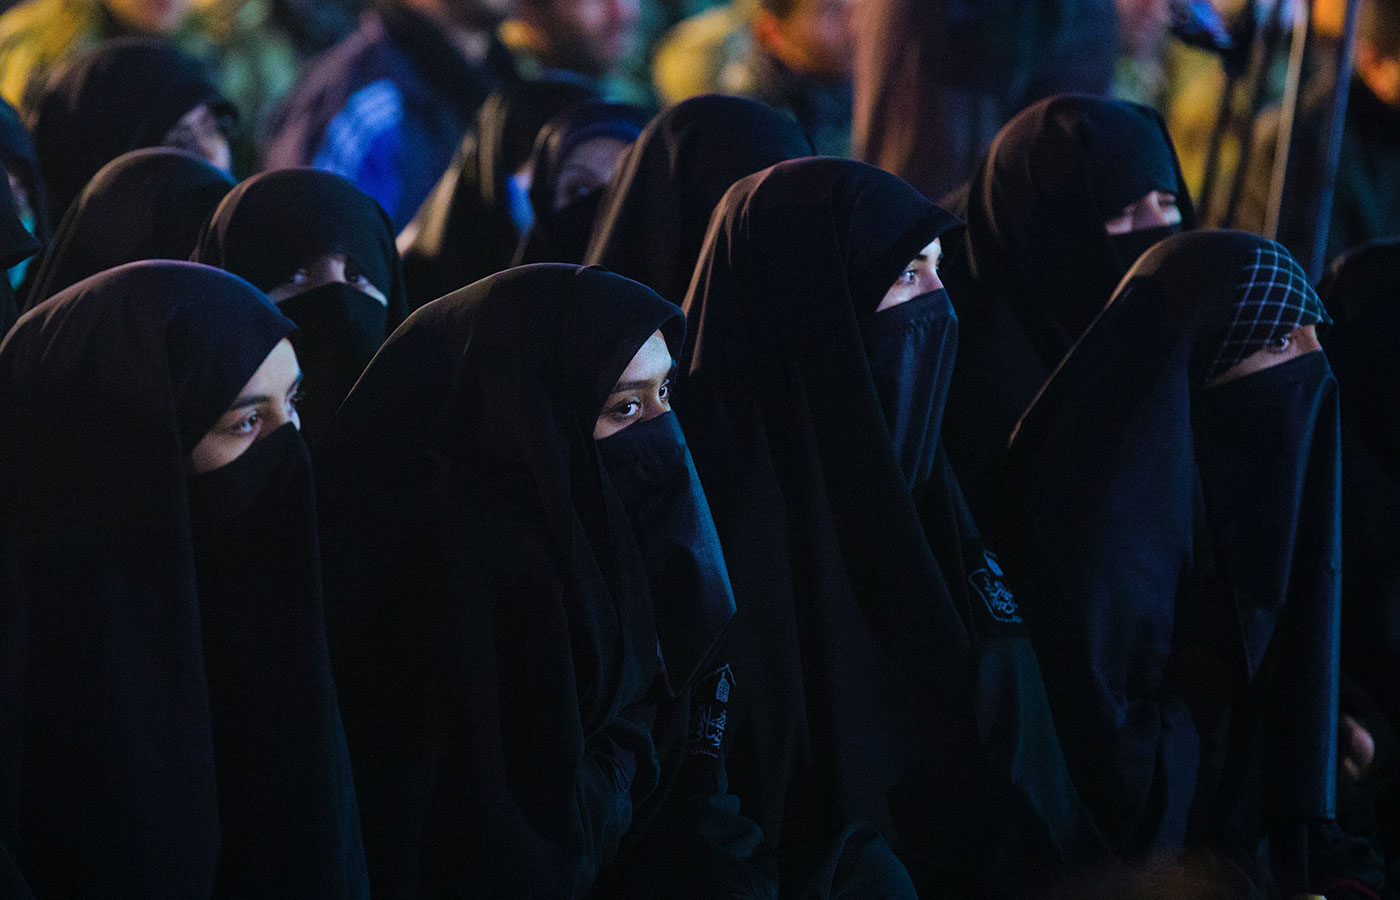 Islamismo e Cultura Árabe 2020